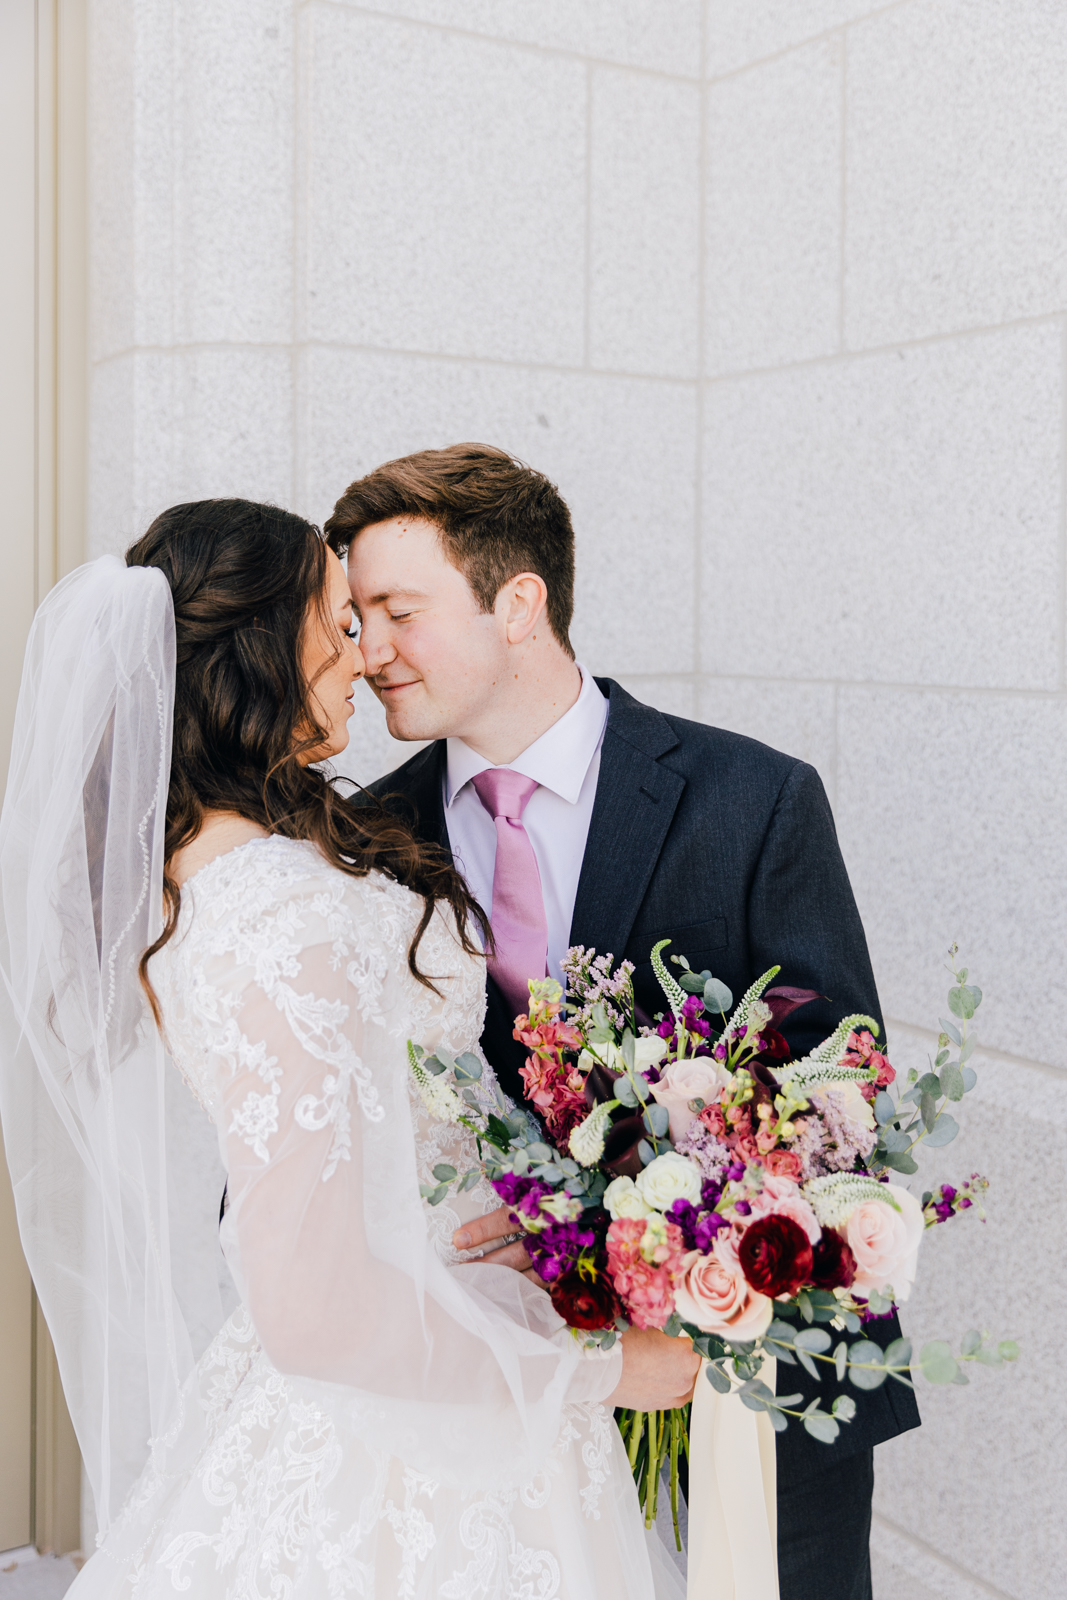 Wedding Dress Train: How MOHs Can Help Brides Adjust It Like a Pro